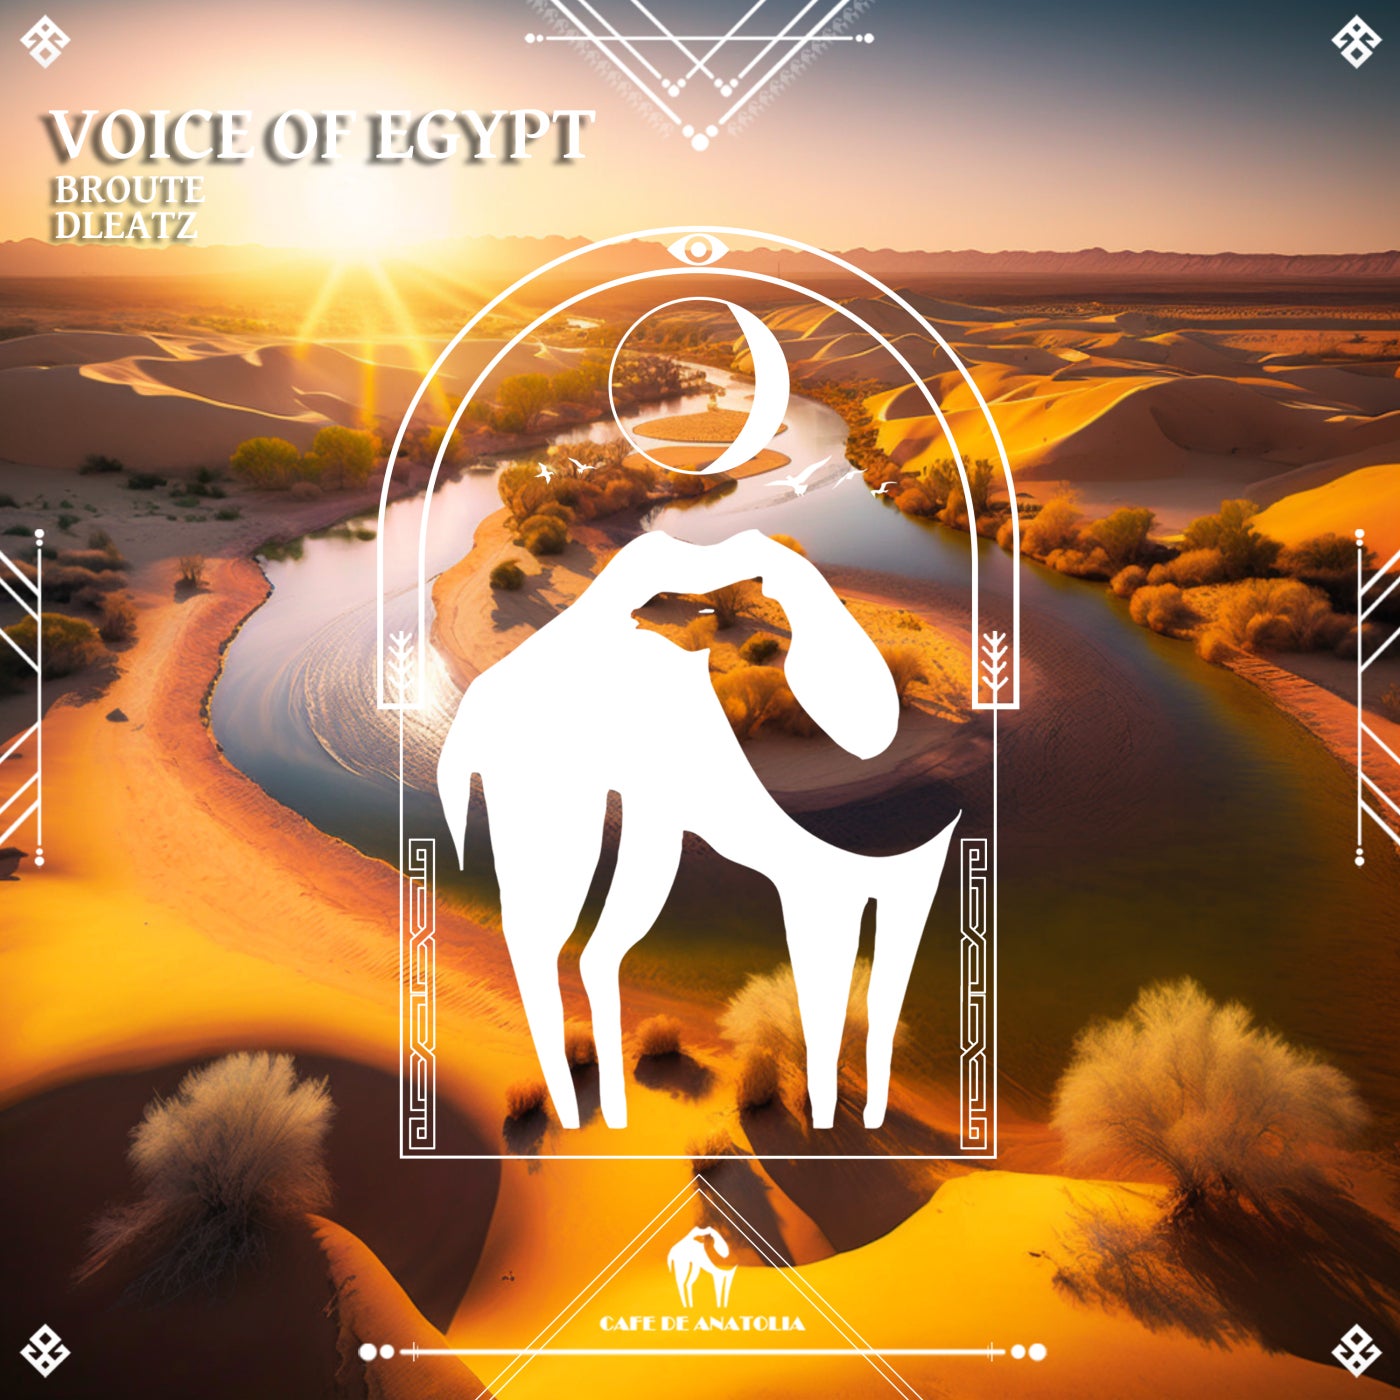 Voice of Egypt